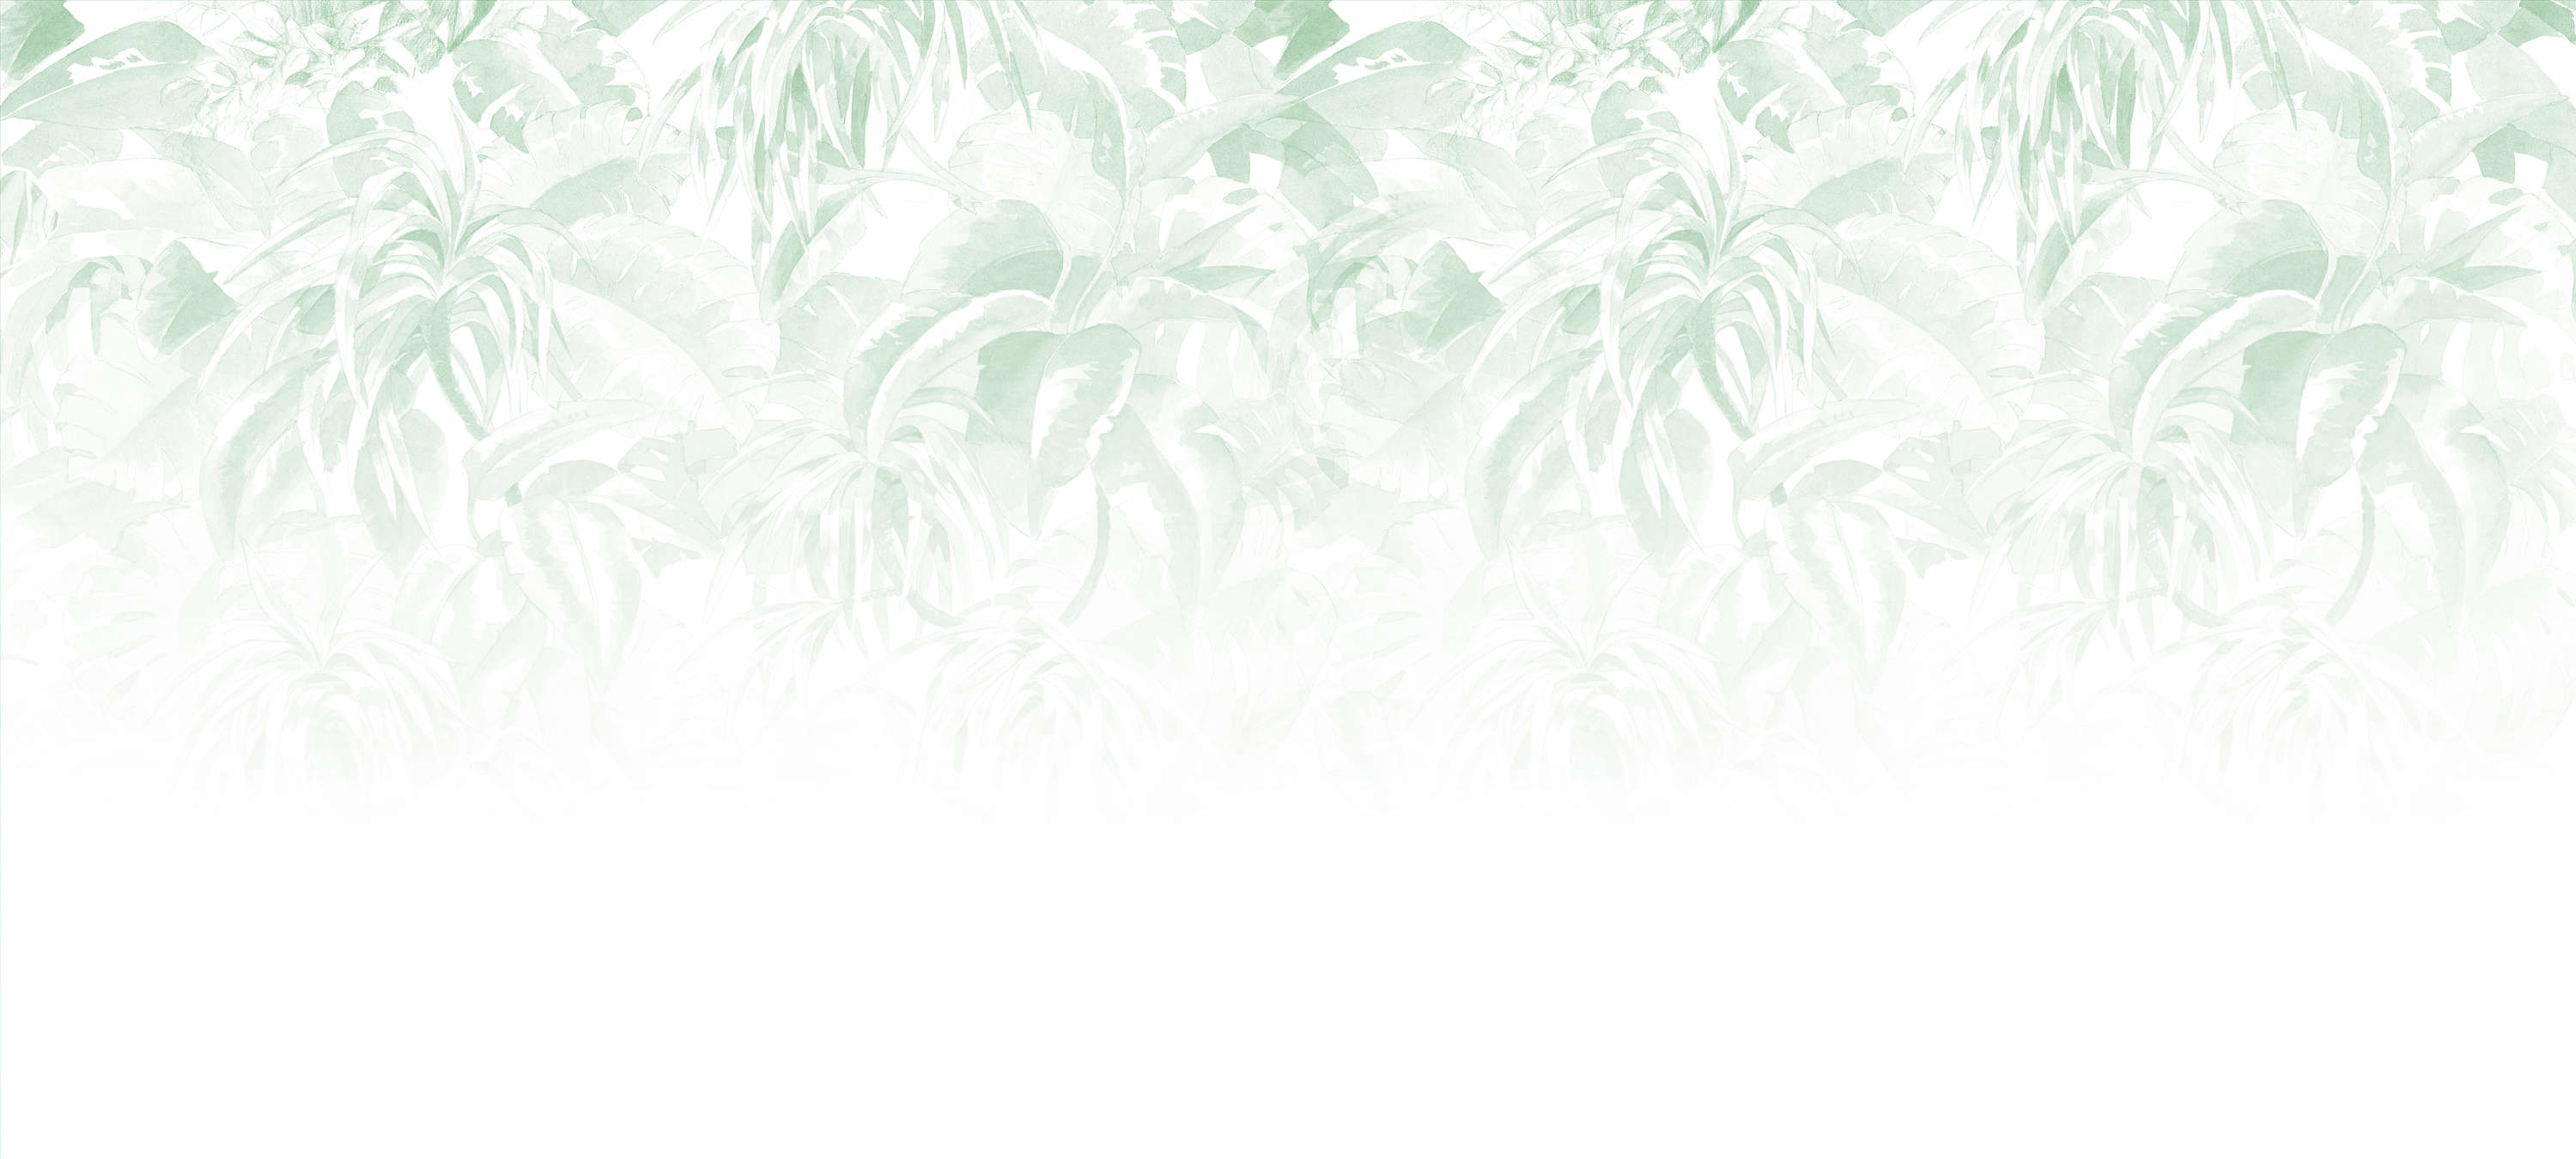             Photo wallpaper tropical leaves, minimalist & natural - Green, White
        